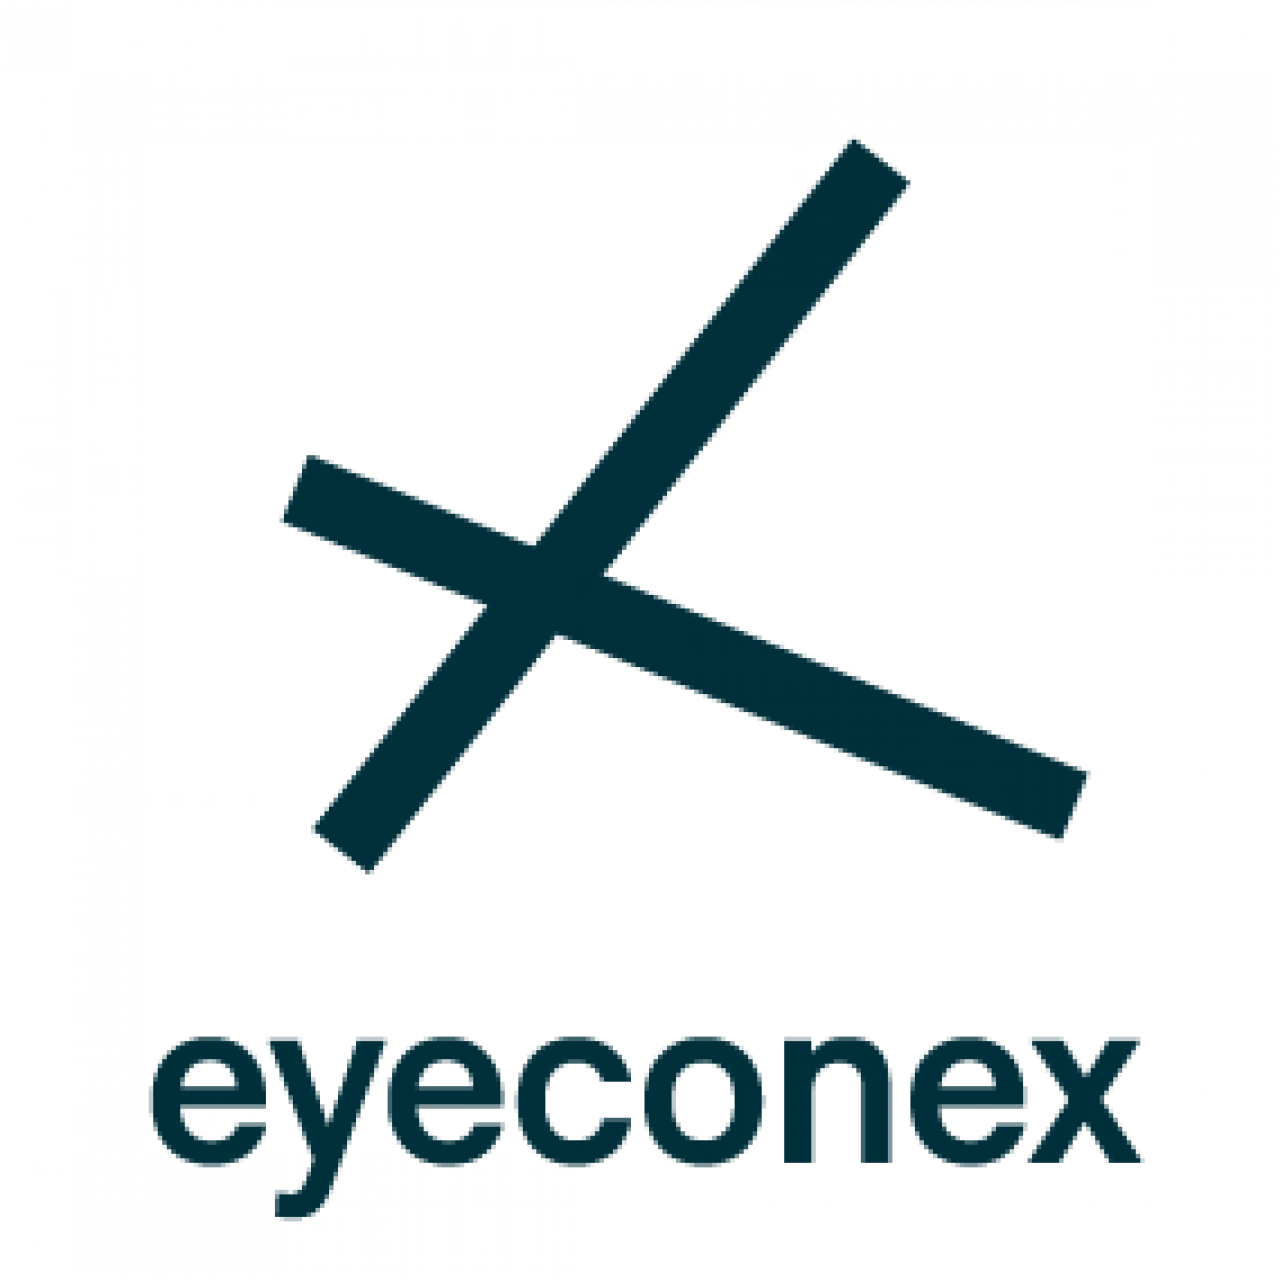 Lx 23 ICON eyeconex